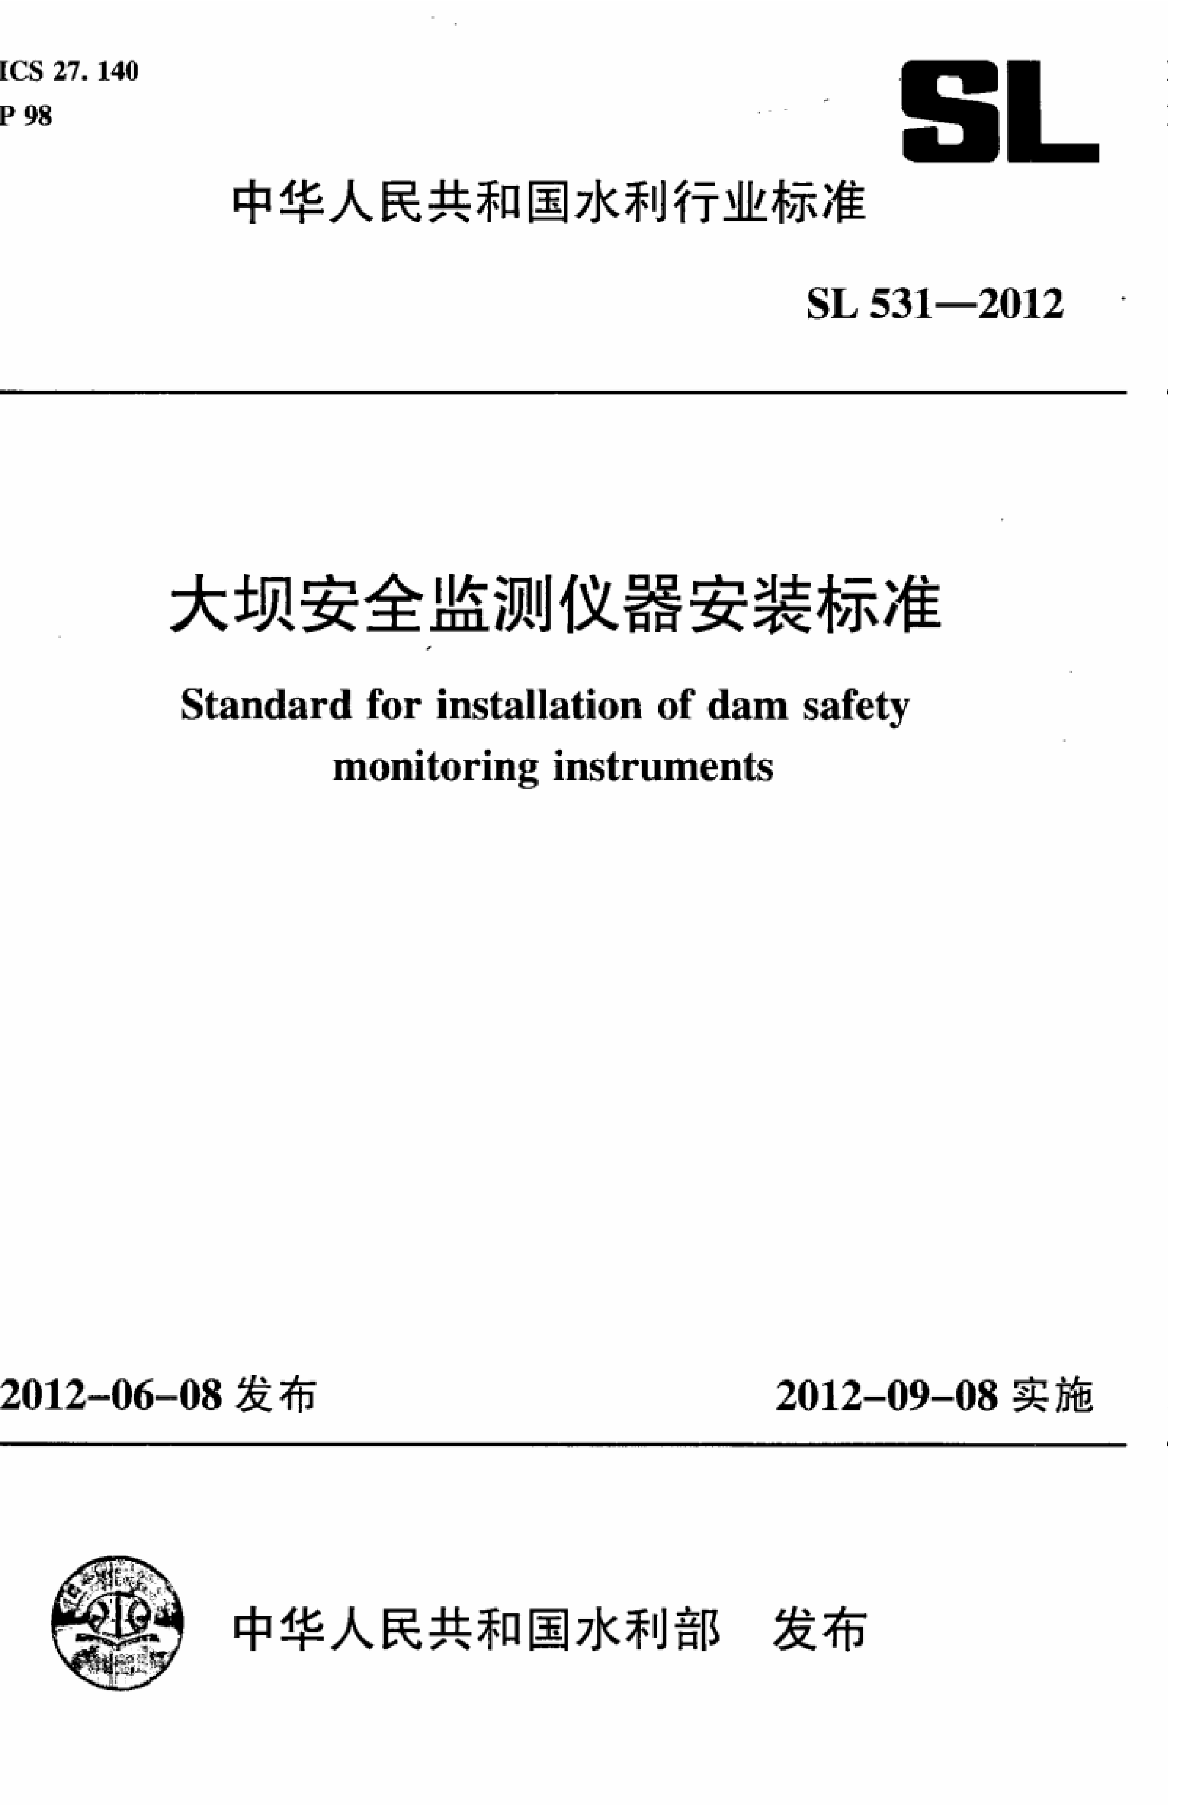 SL531-2012大坝安全监测仪器安装标准-图一